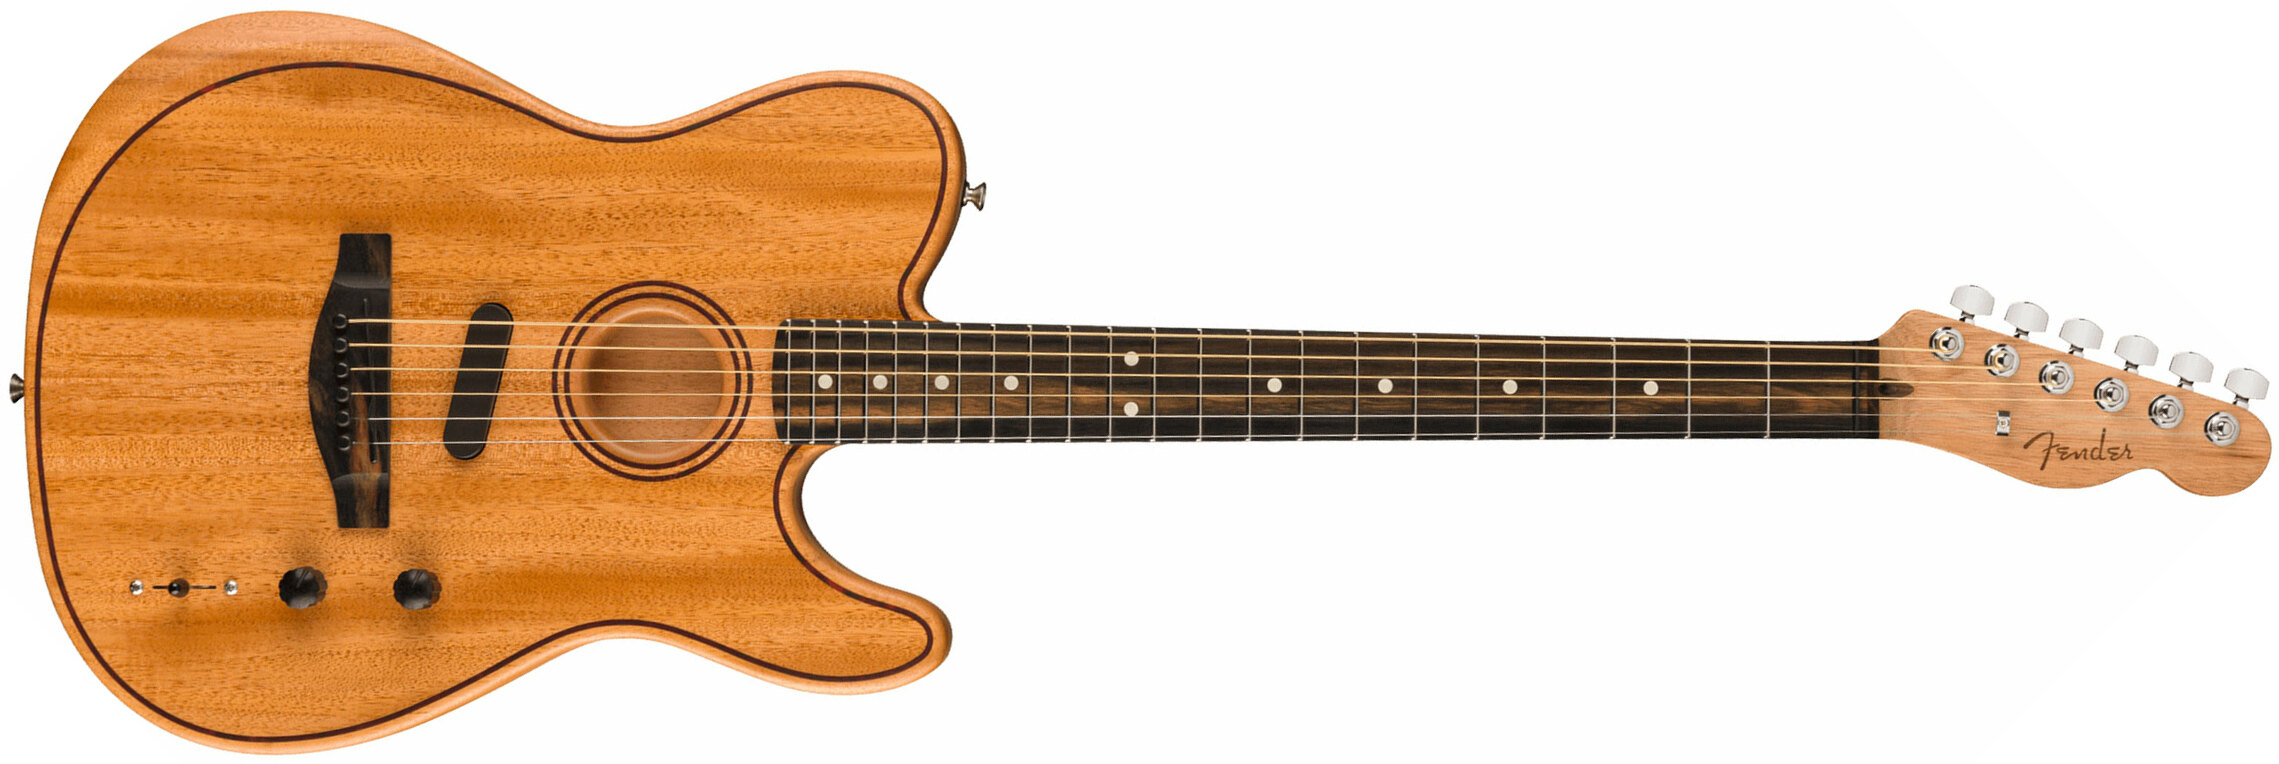 Fender Tele American Acoustasonic All Mahogany Usa Tout Acajou Eb - Natural - Guitare Electro Acoustique - Main picture